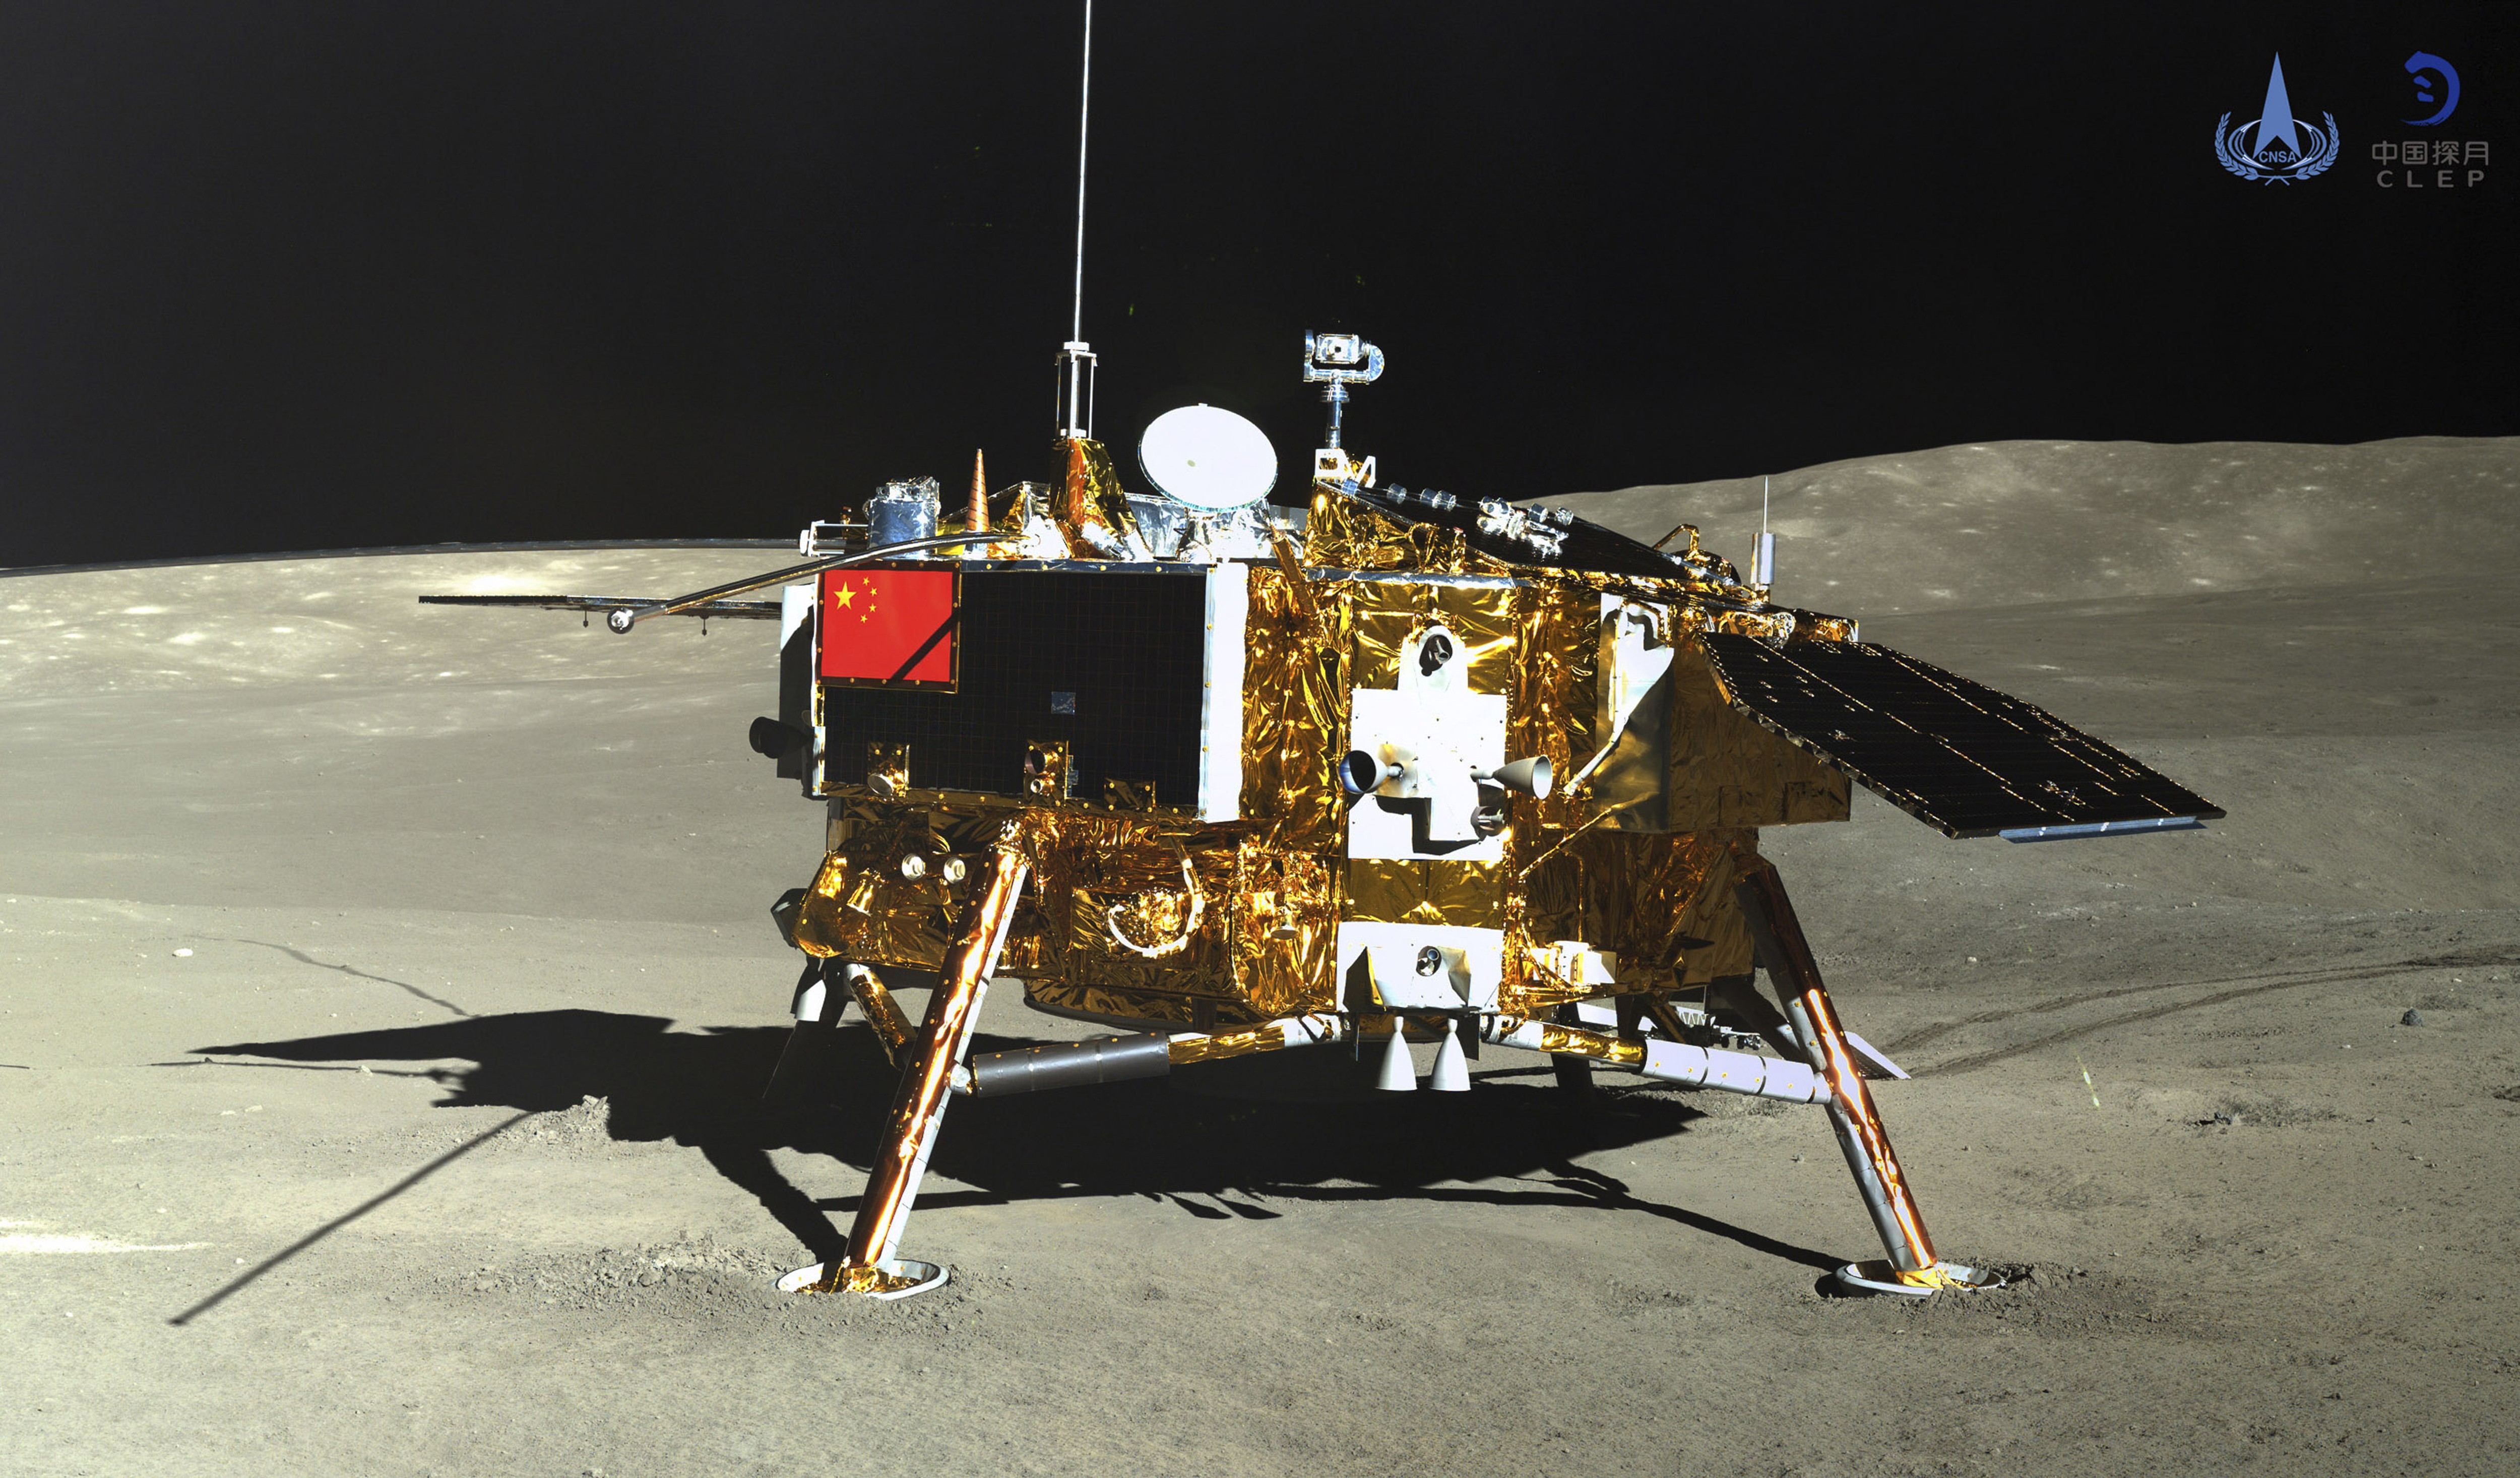 China’s lunar rover, Yutu, has made a groundbreaking discovery. Photo: Xinhua